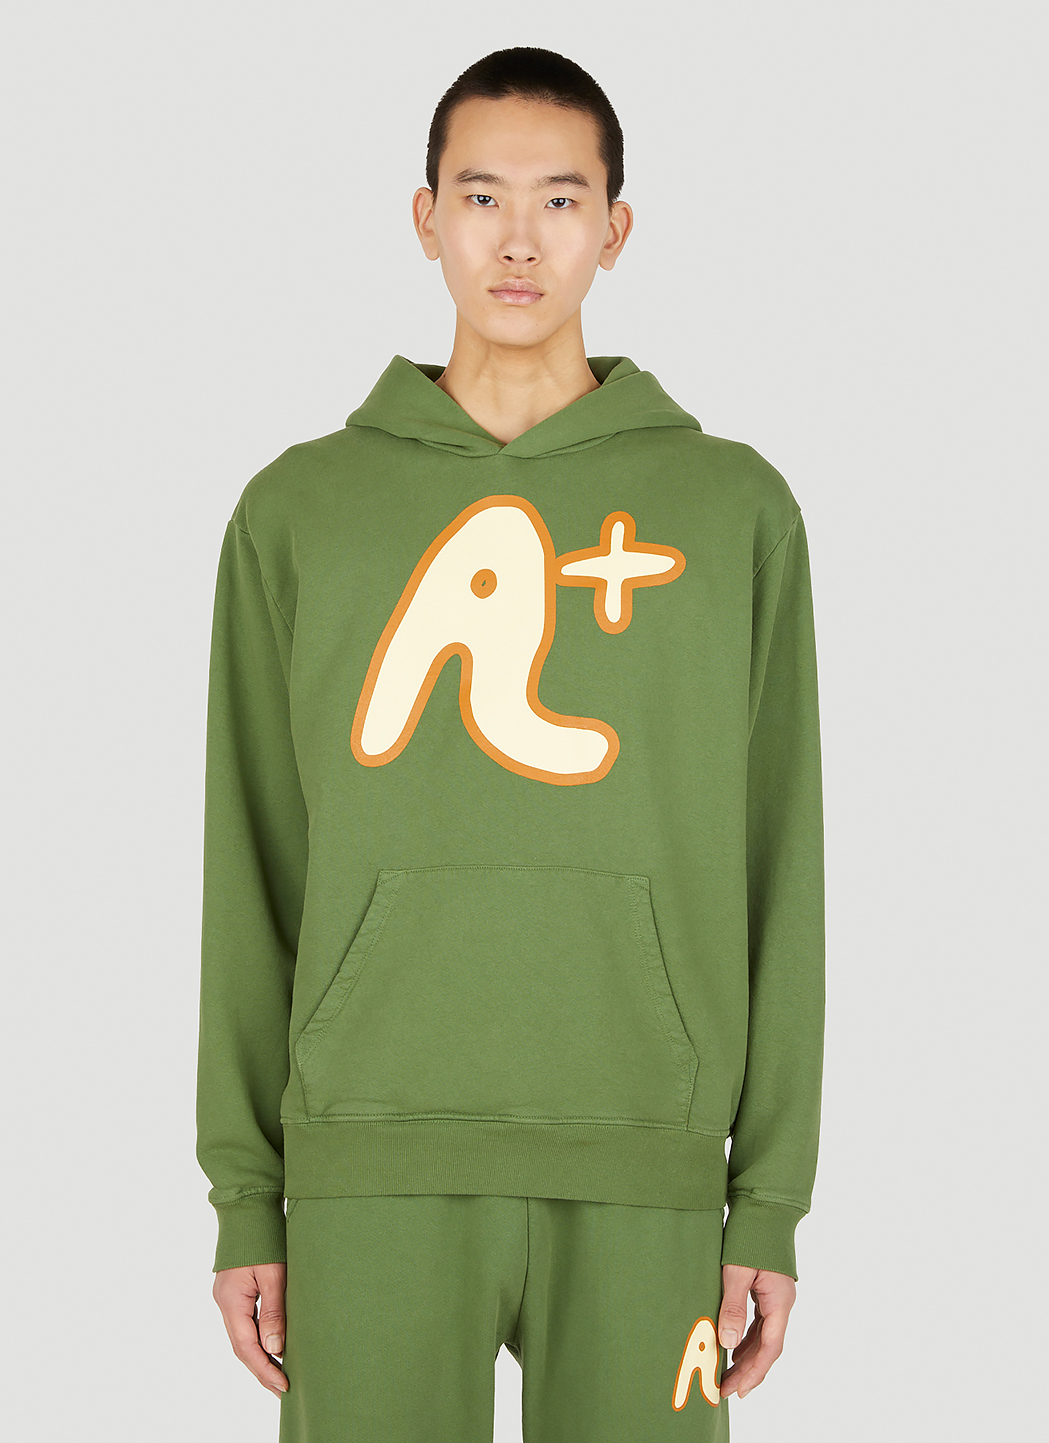 A+ Hooded Sweatshirt